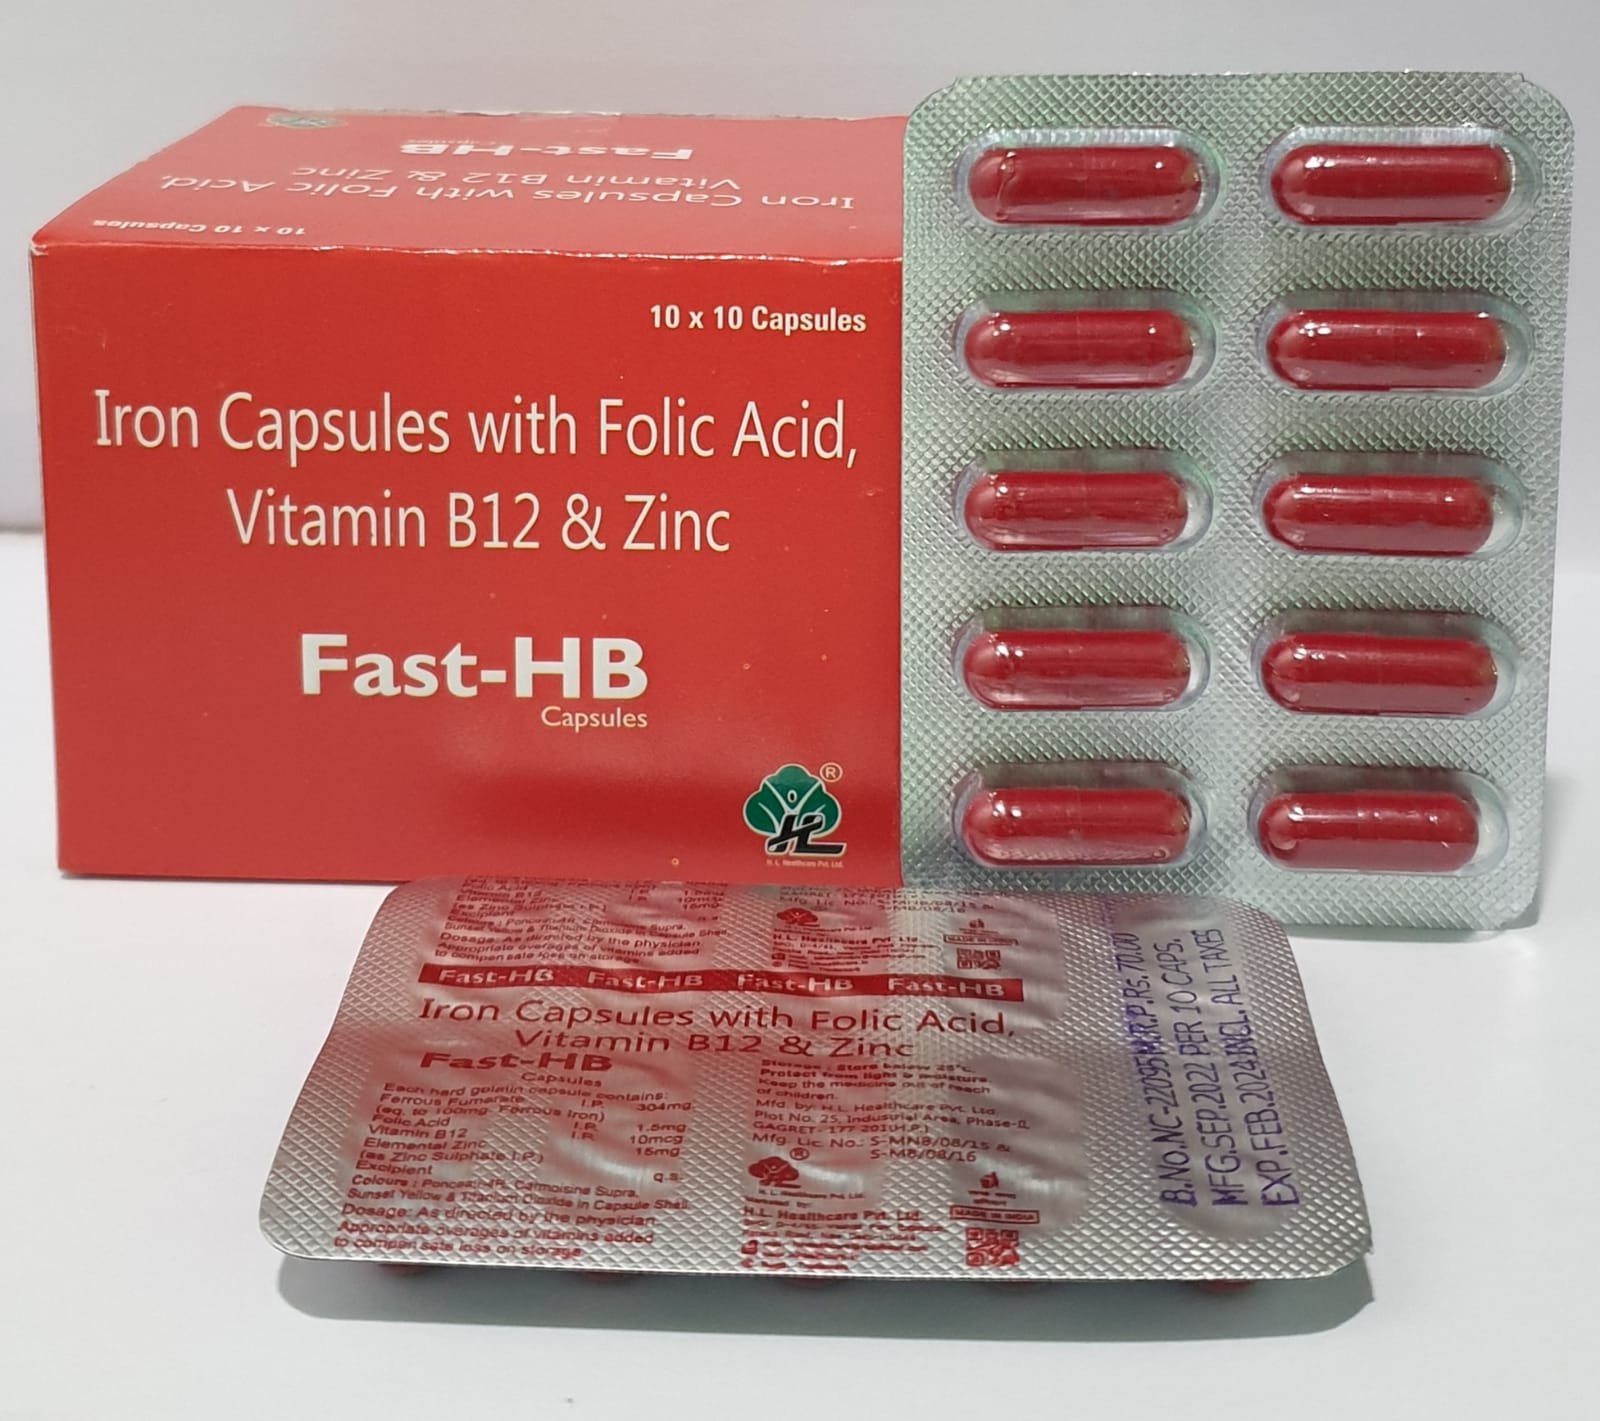 ferric fumarate 100mg +folic acid
1.5mg+vitamin b12 10mcg+ zinc 15mg